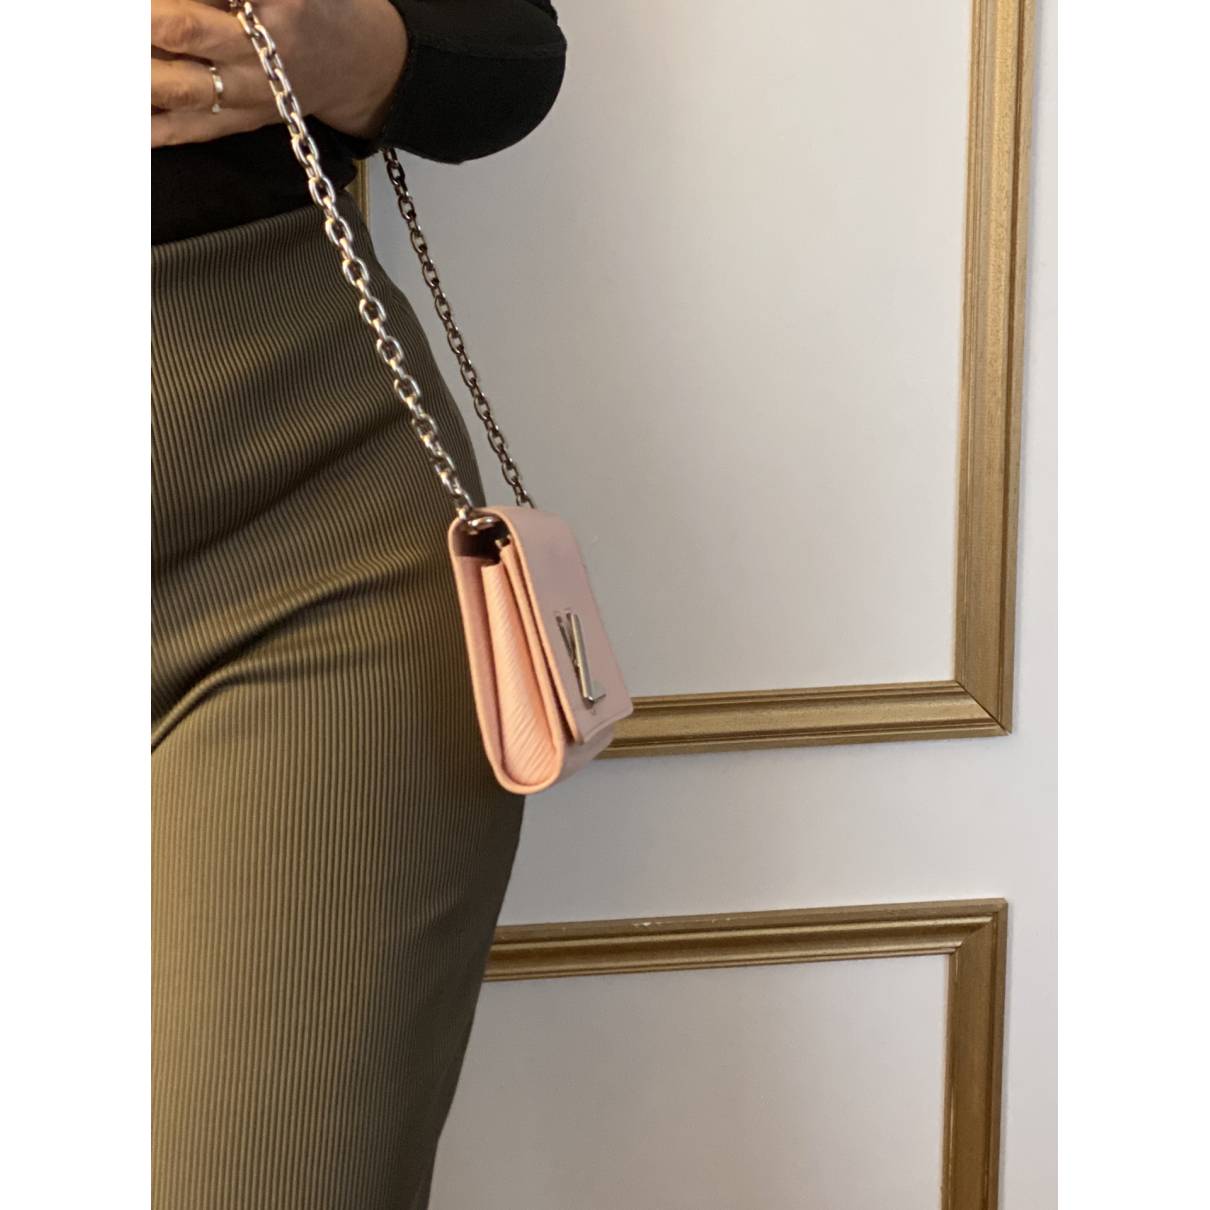 Louis Vuitton Handtaschen aus Leder - Rosa - 30007468